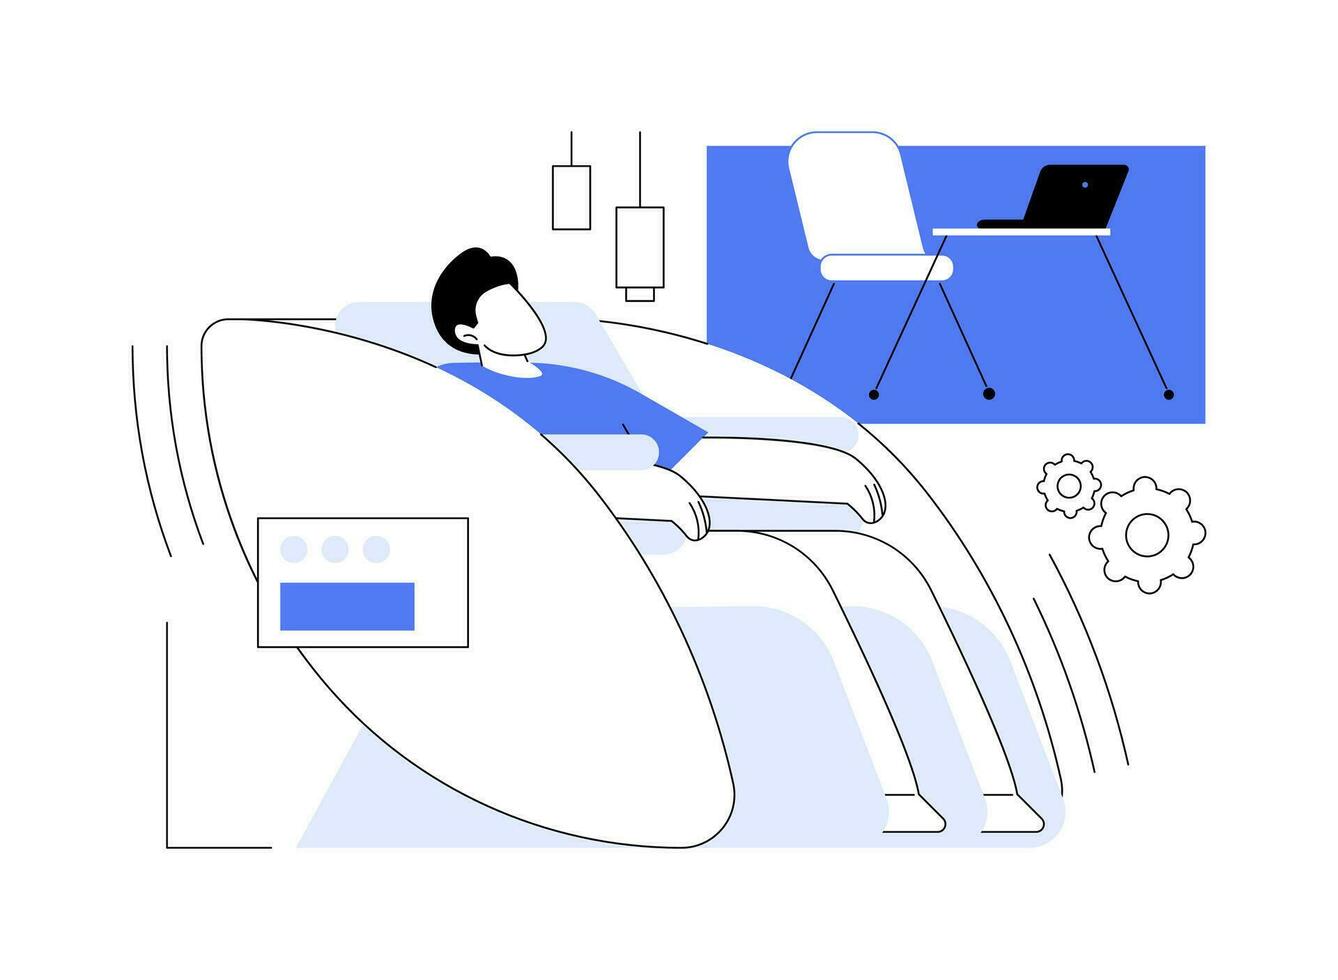 Office massage zone isolated cartoon vector illustrations.